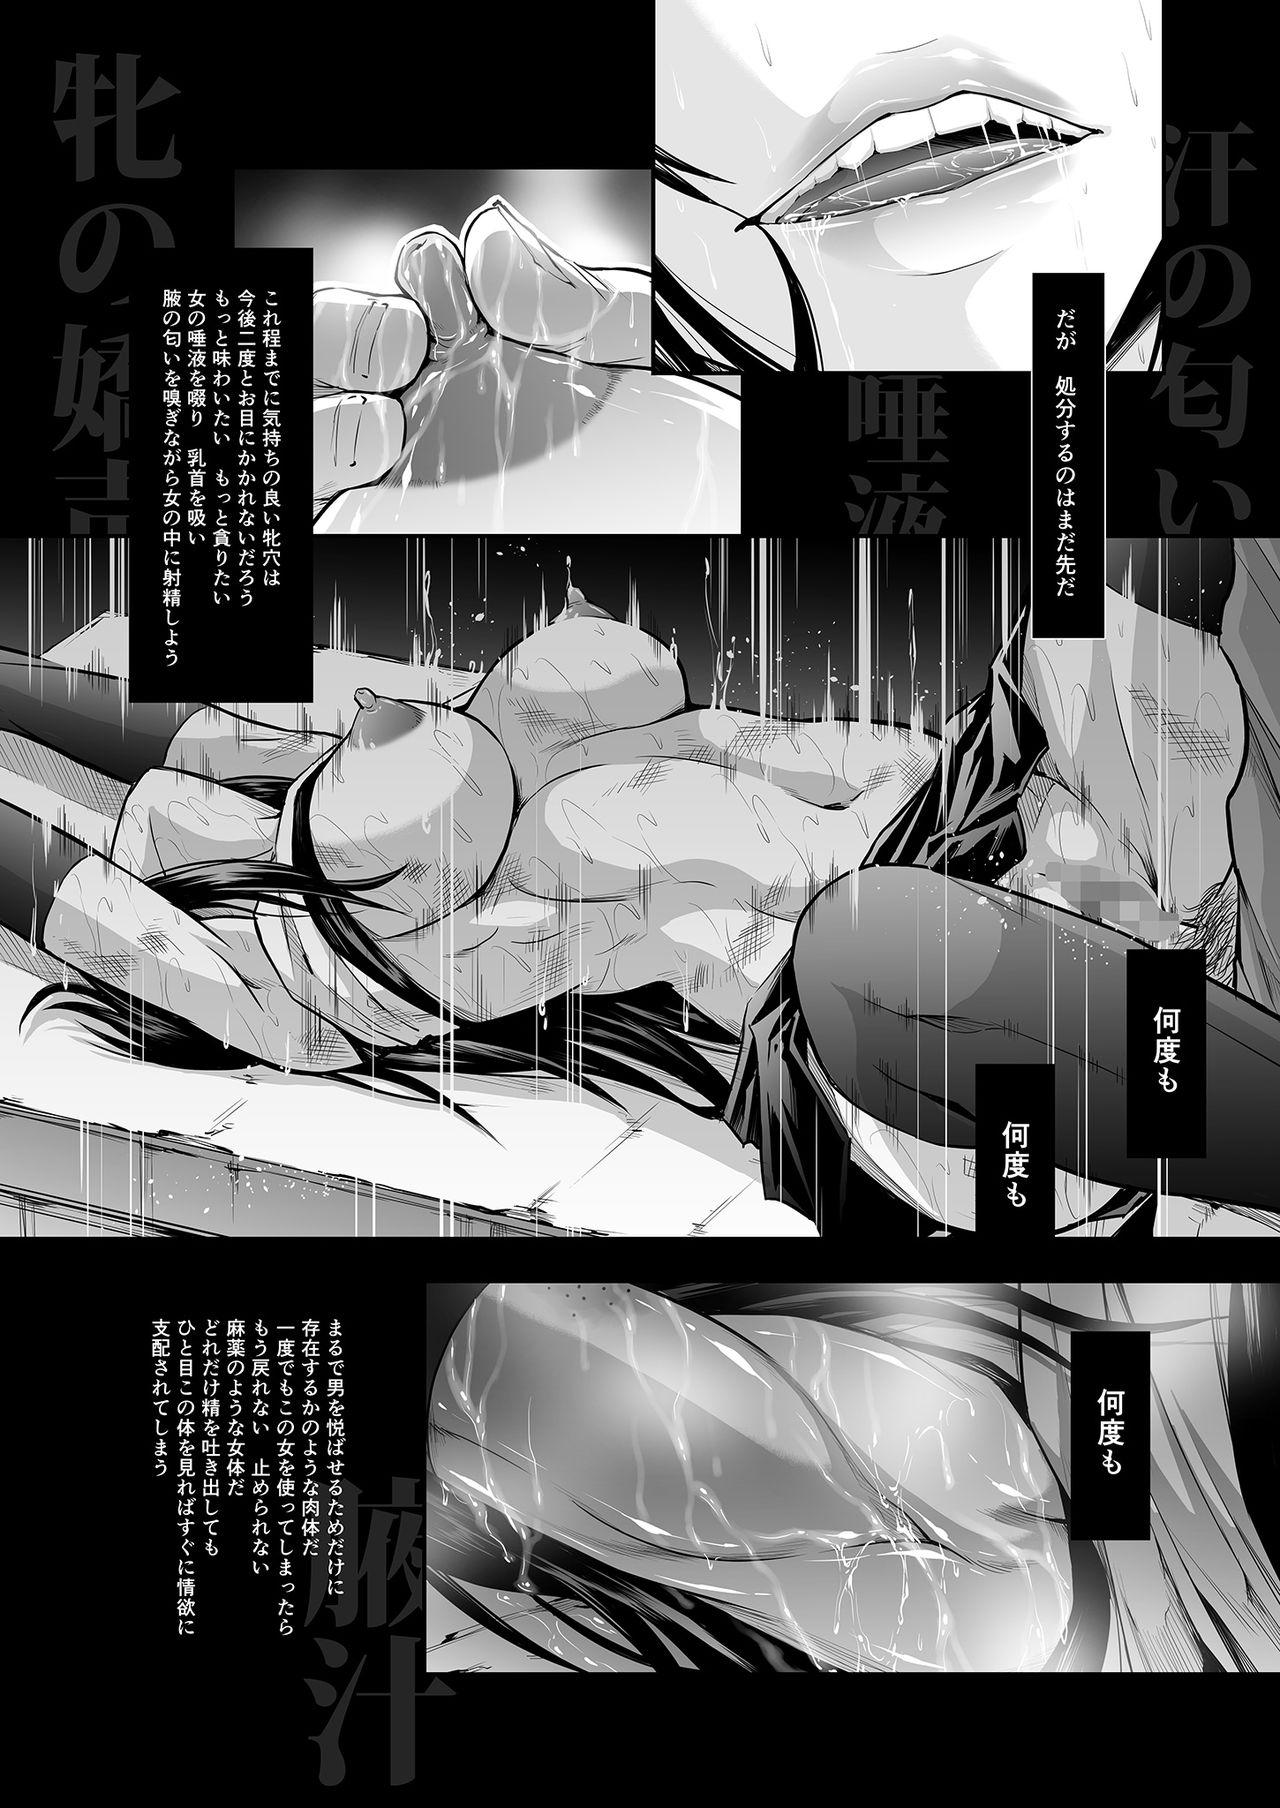 Adolescente Zappitsu Light - Final fantasy vii The onechanbara Italiano - Page 8